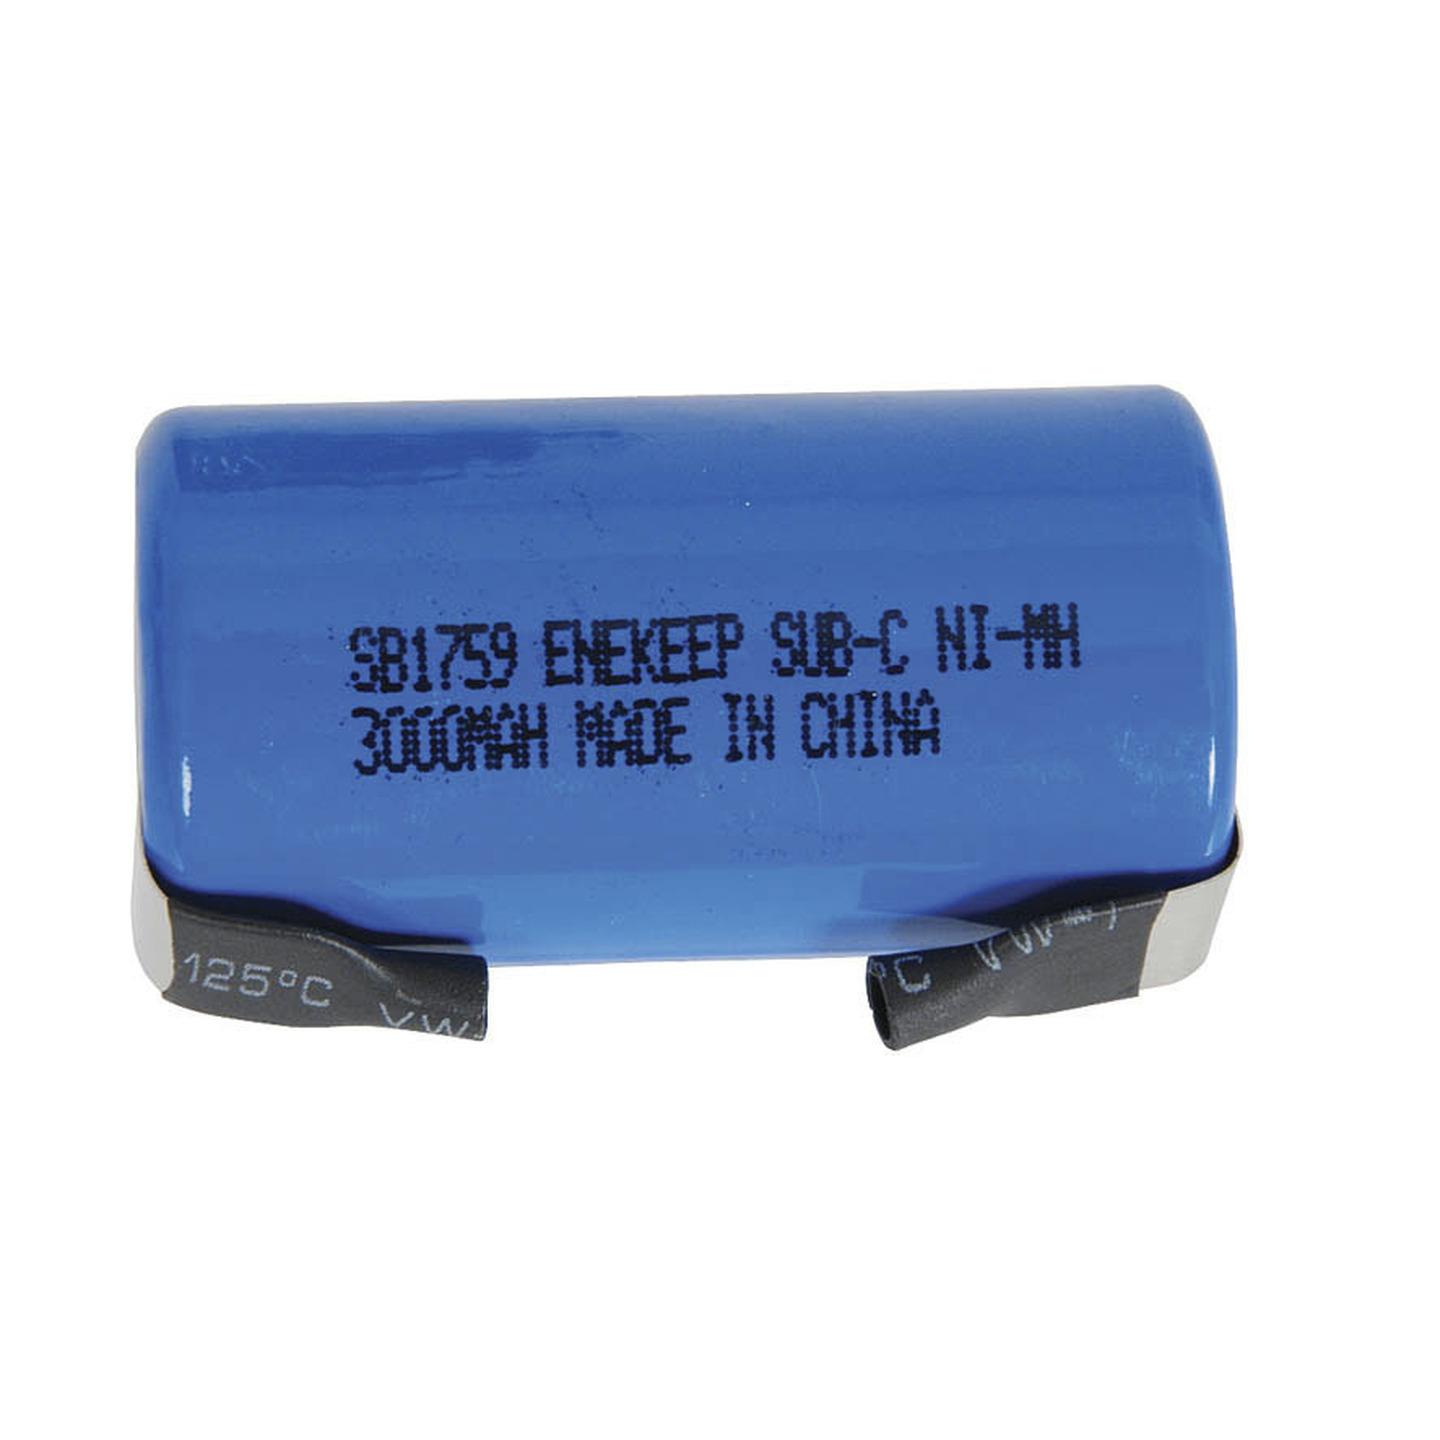 Enekeep Ni-MH Sub C Battery